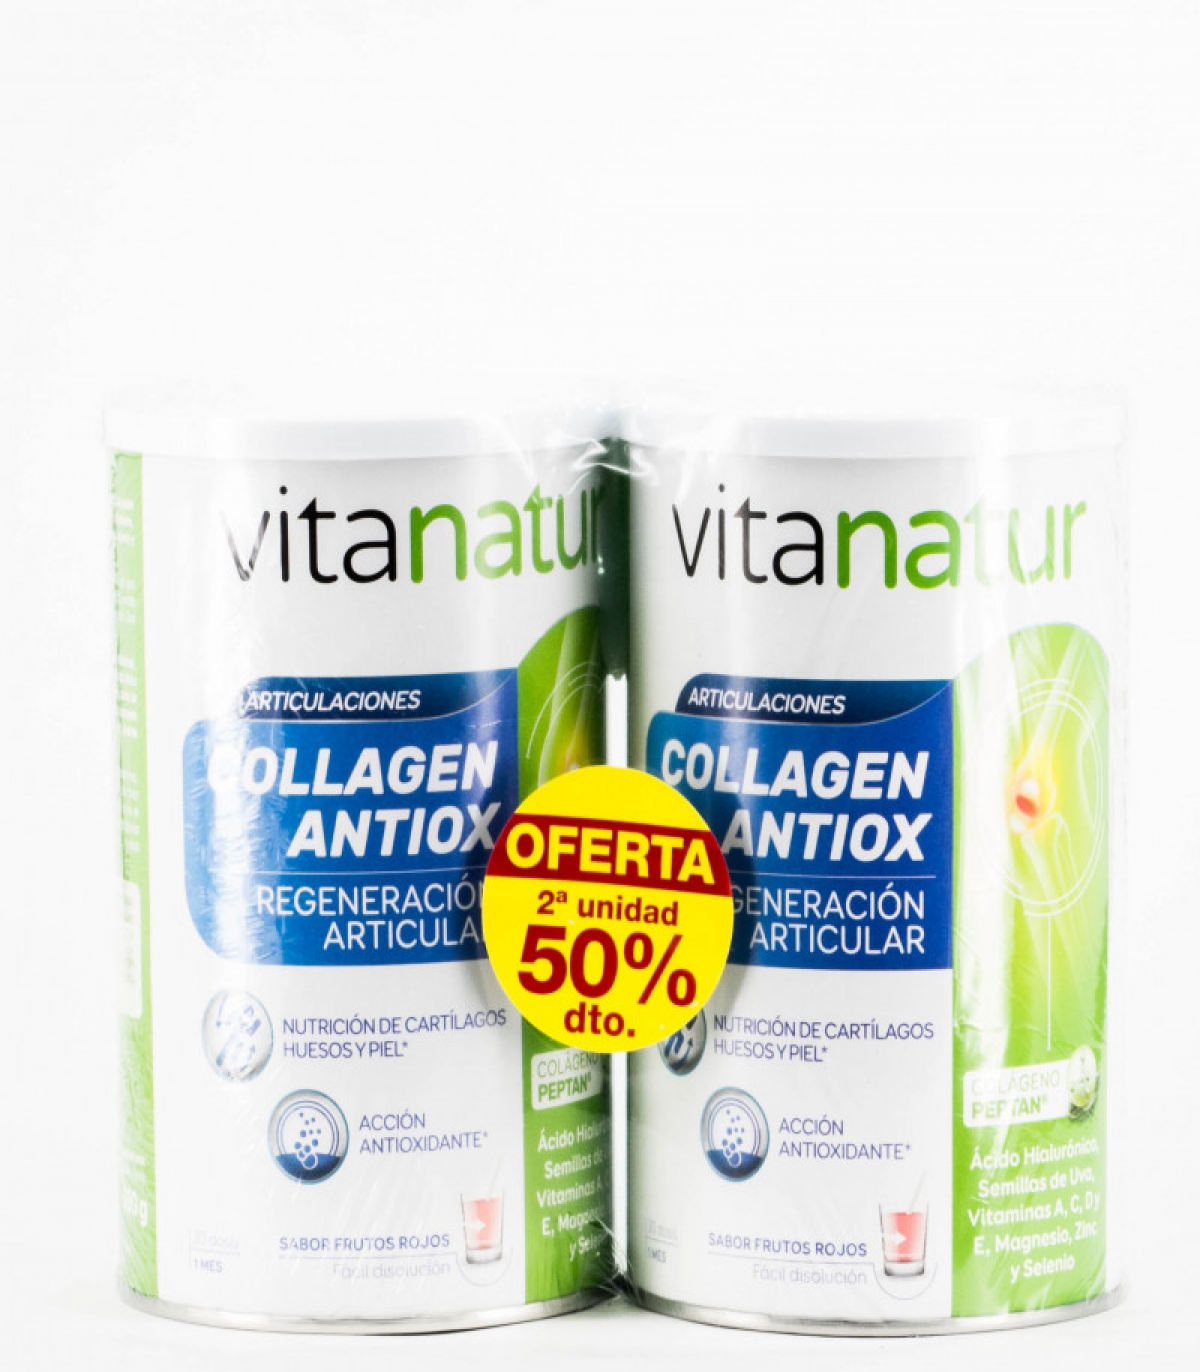 Vitanatur Collagen Antiox Duplo